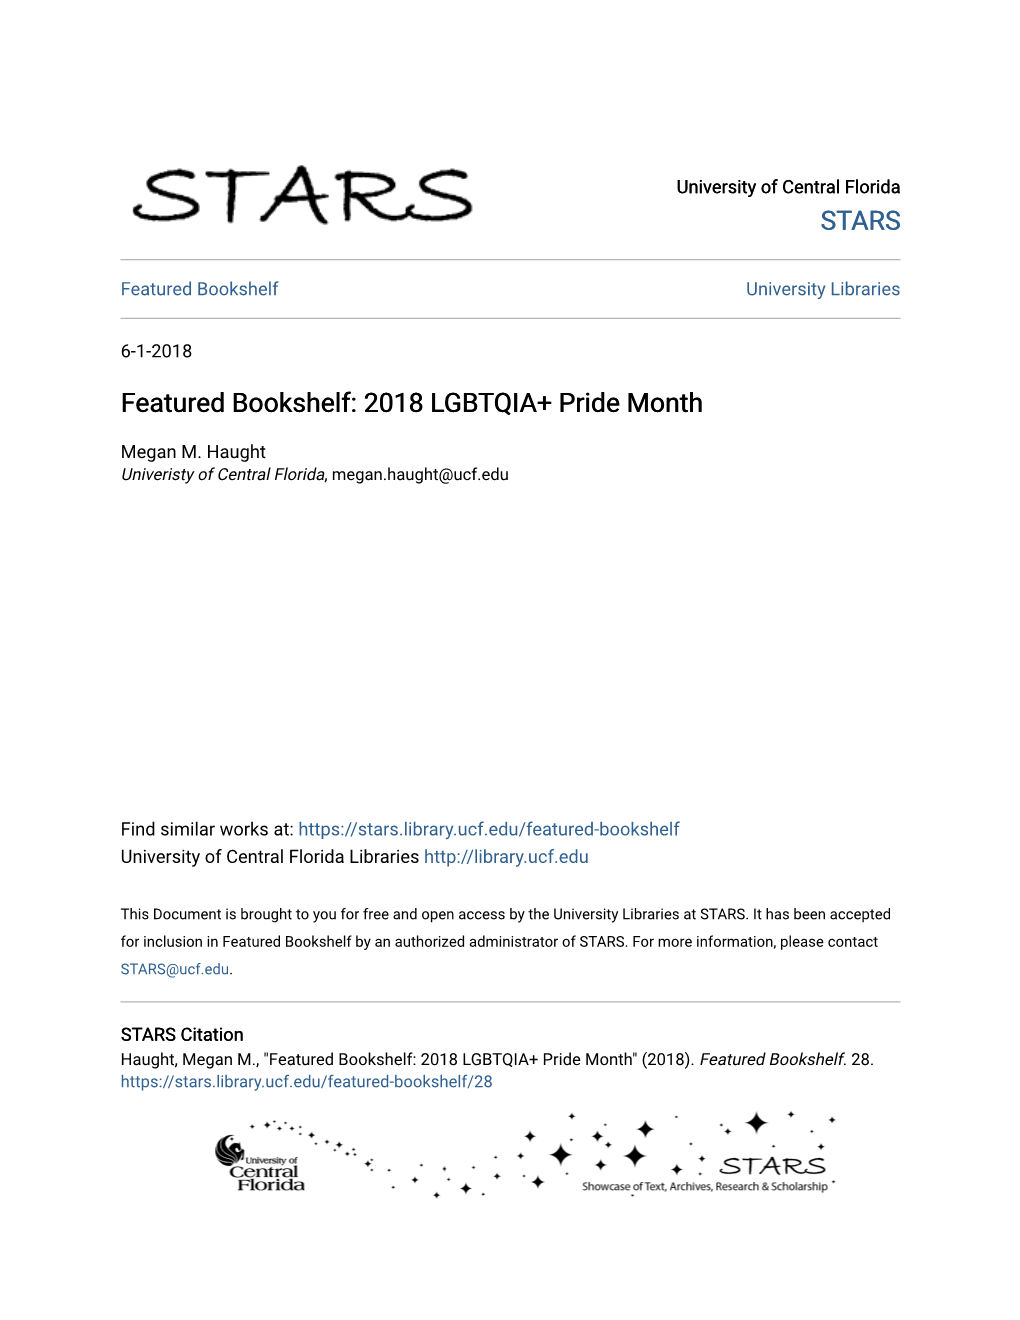 Featured Bookshelf: 2018 LGBTQIA+ Pride Month